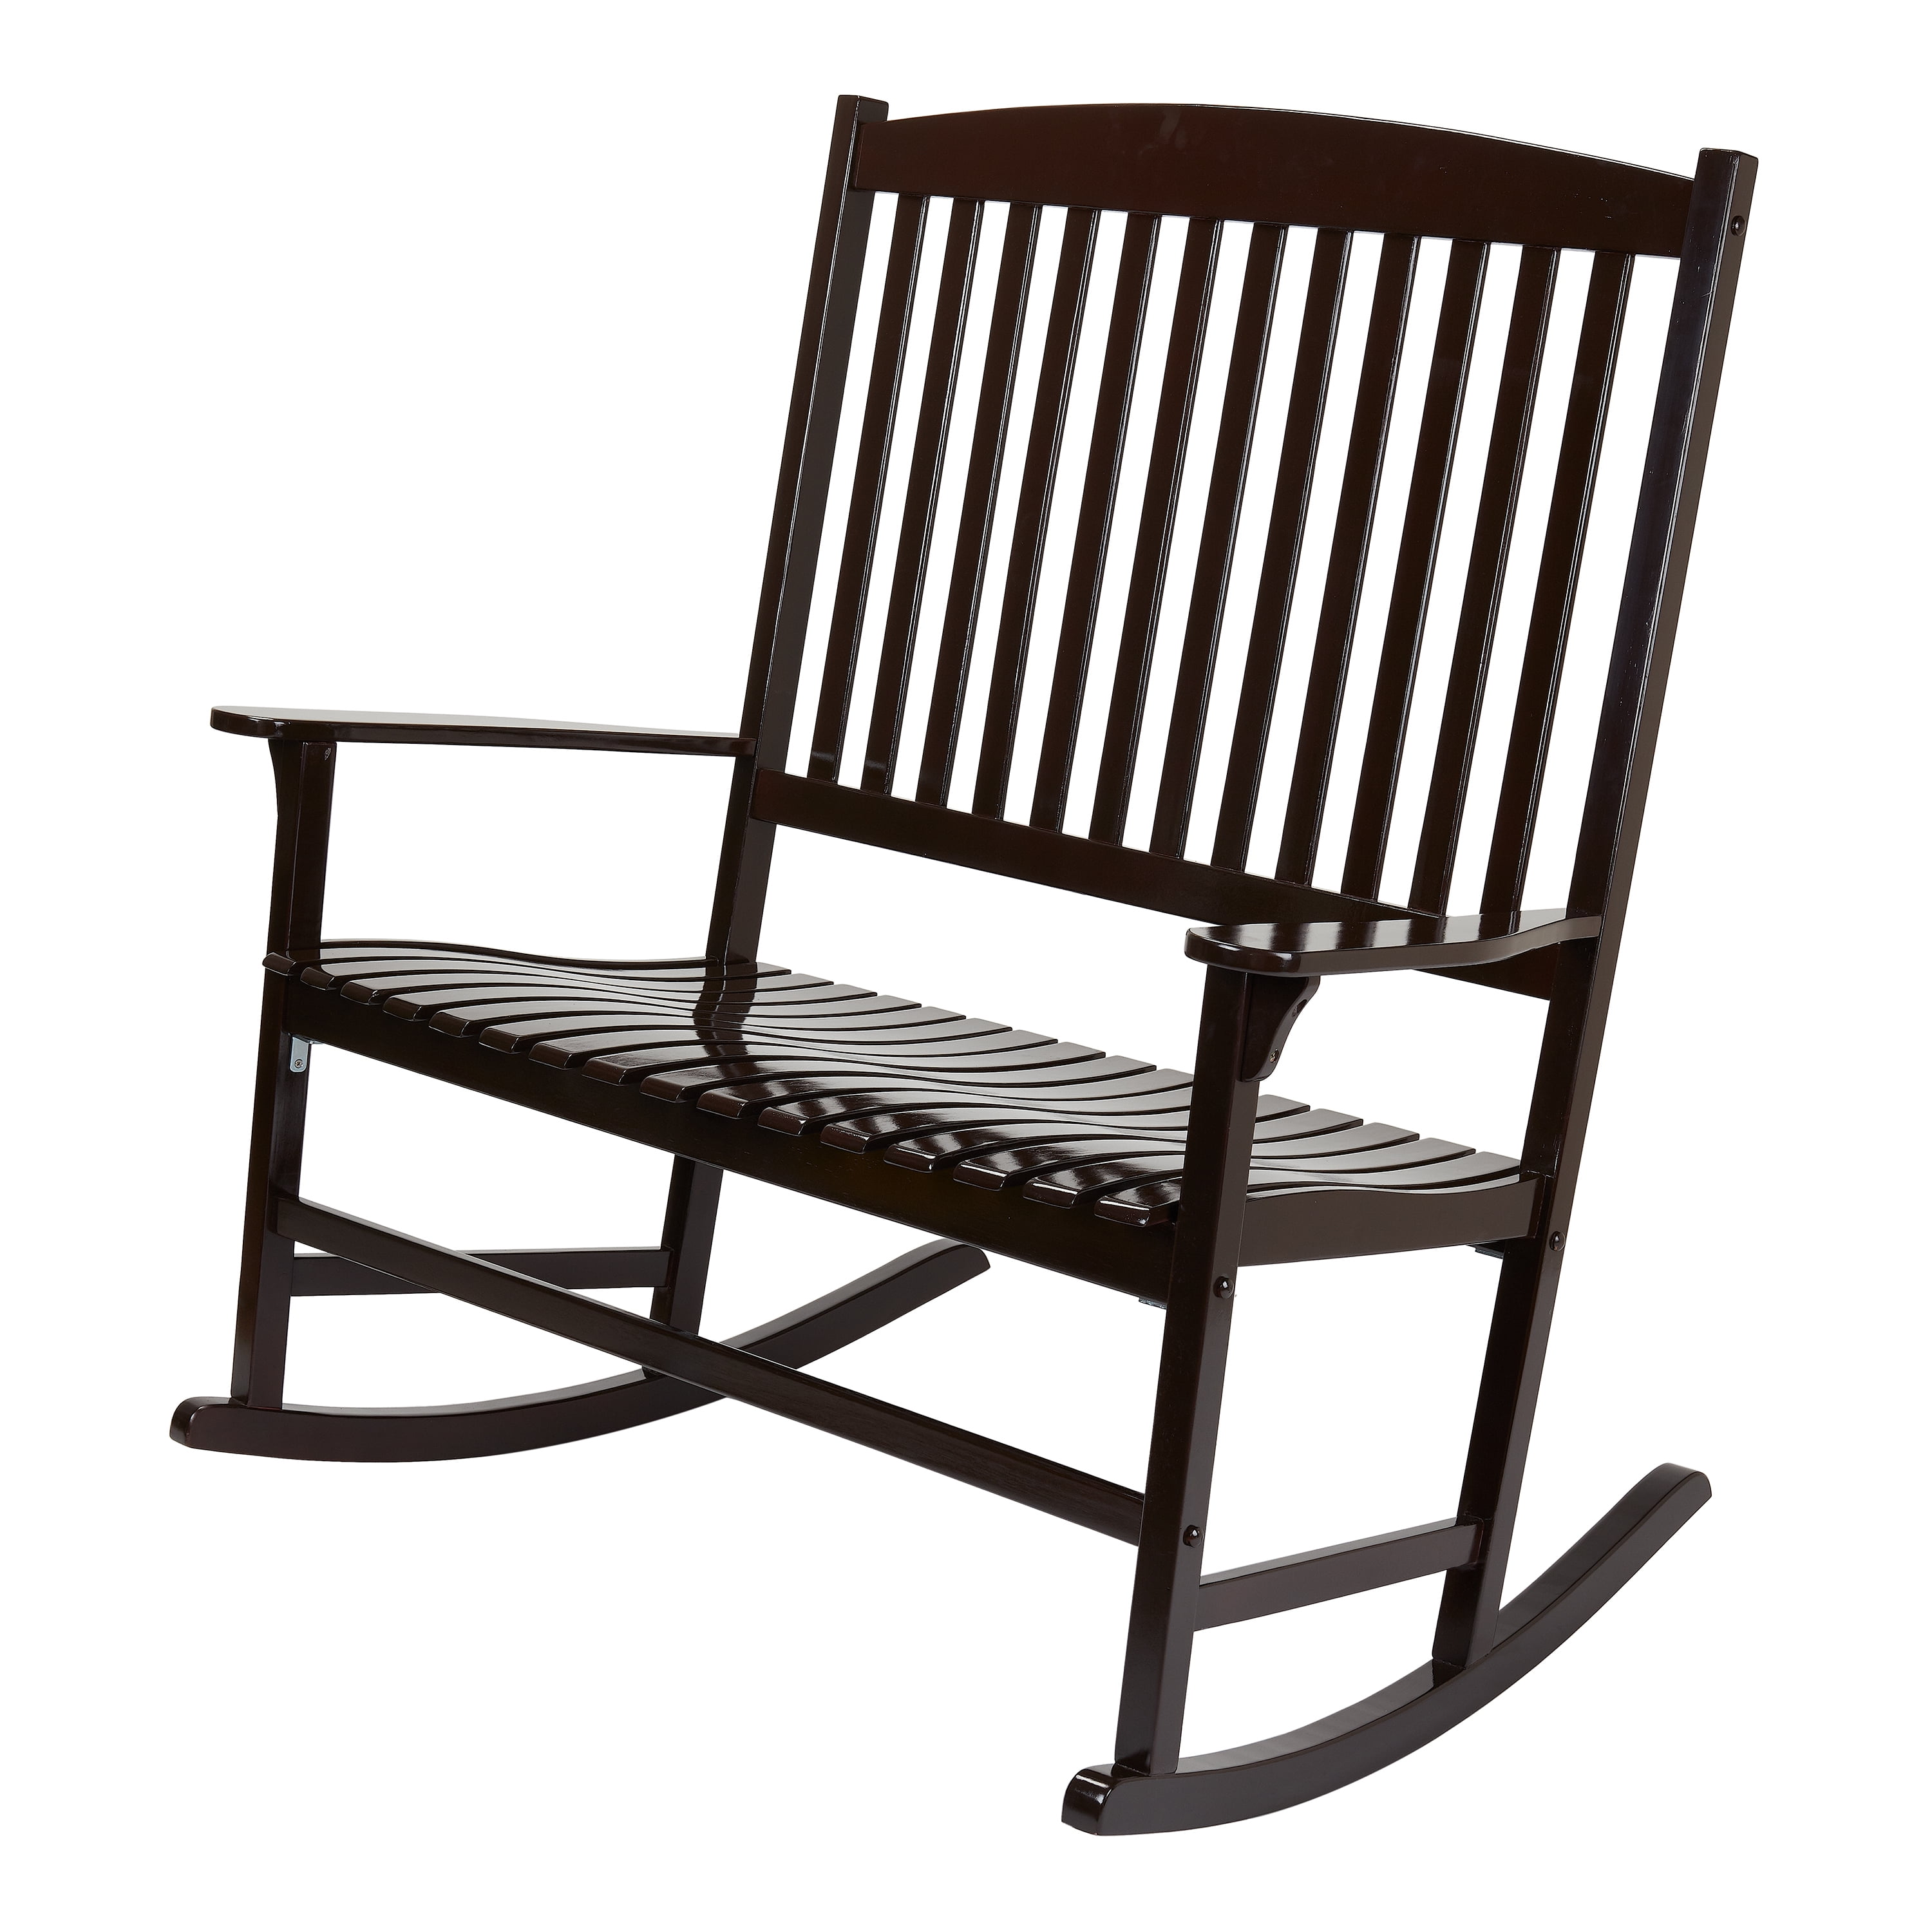 Mainstays Double Wood Outdoor Rocker Chair, Dark Brown